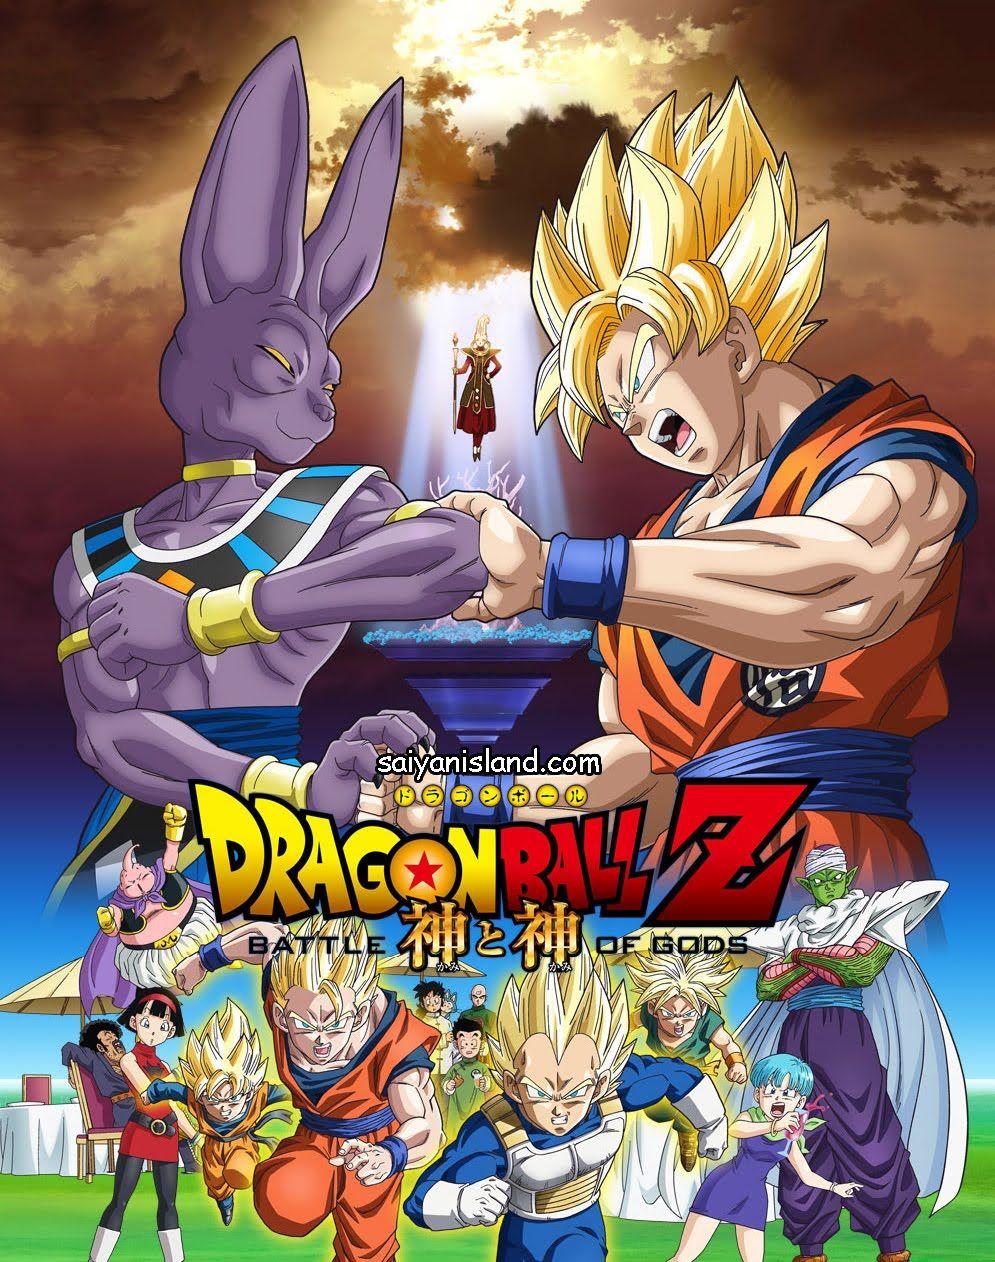 Dragon Ball Z Battle of Gods Poster Cartoon Wallpaper Image for iPhone